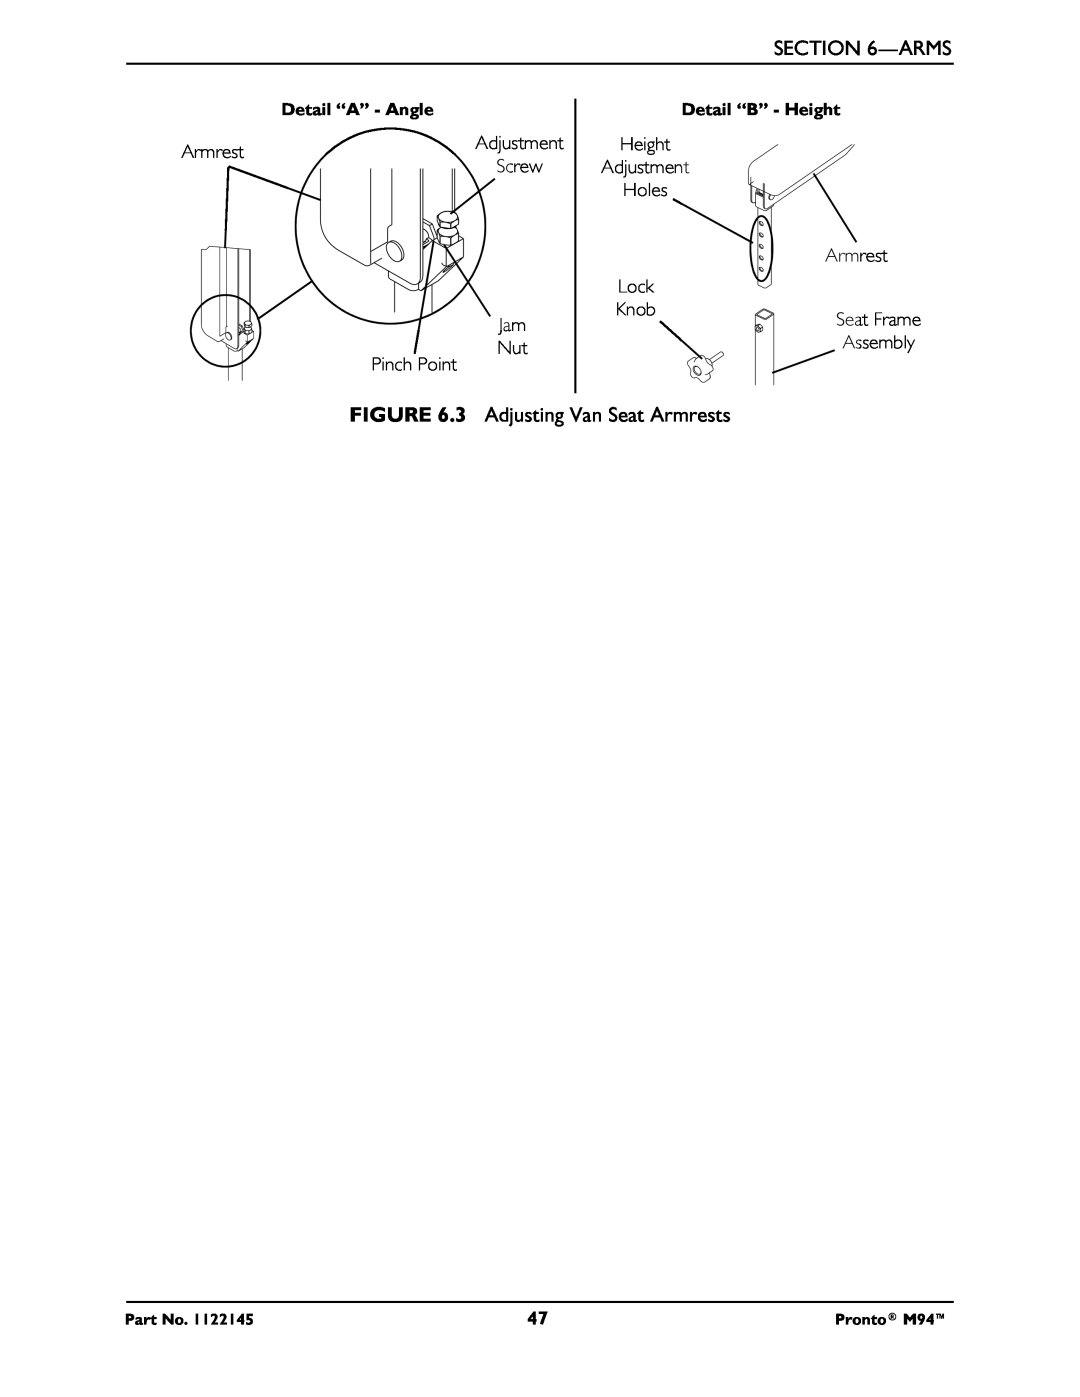 Invacare Pronto M71 manual Arms, 3 Adjusting Van Seat Armrests, Jam Nut Pinch Point 